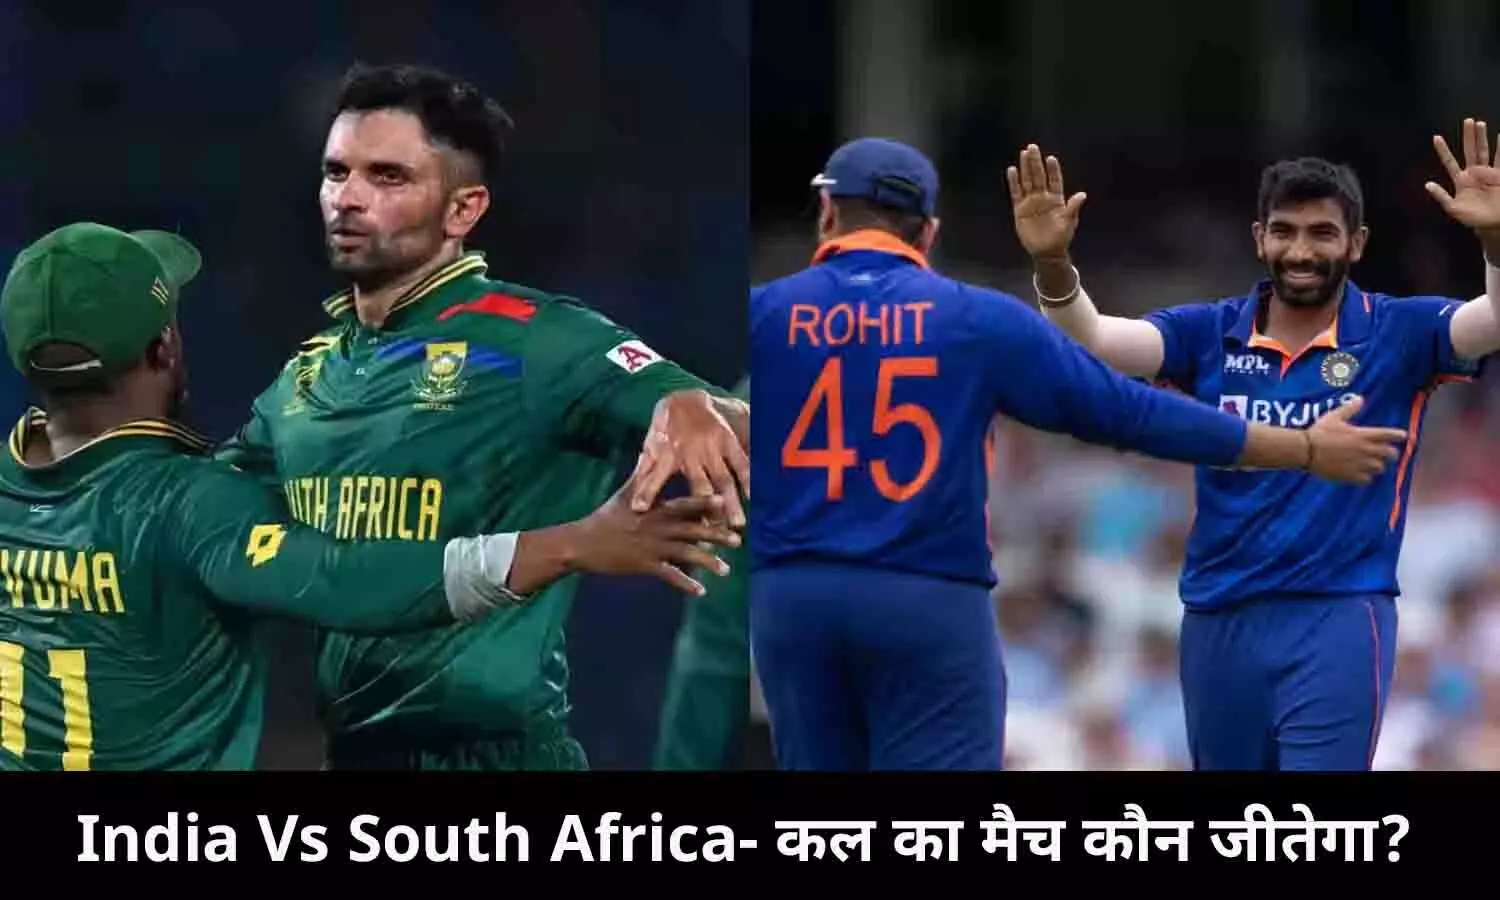 IND vs SA, Kal Ka Match Kaun Jitega: India Vs South Africa- कल का मैच कौन जीतेगा?